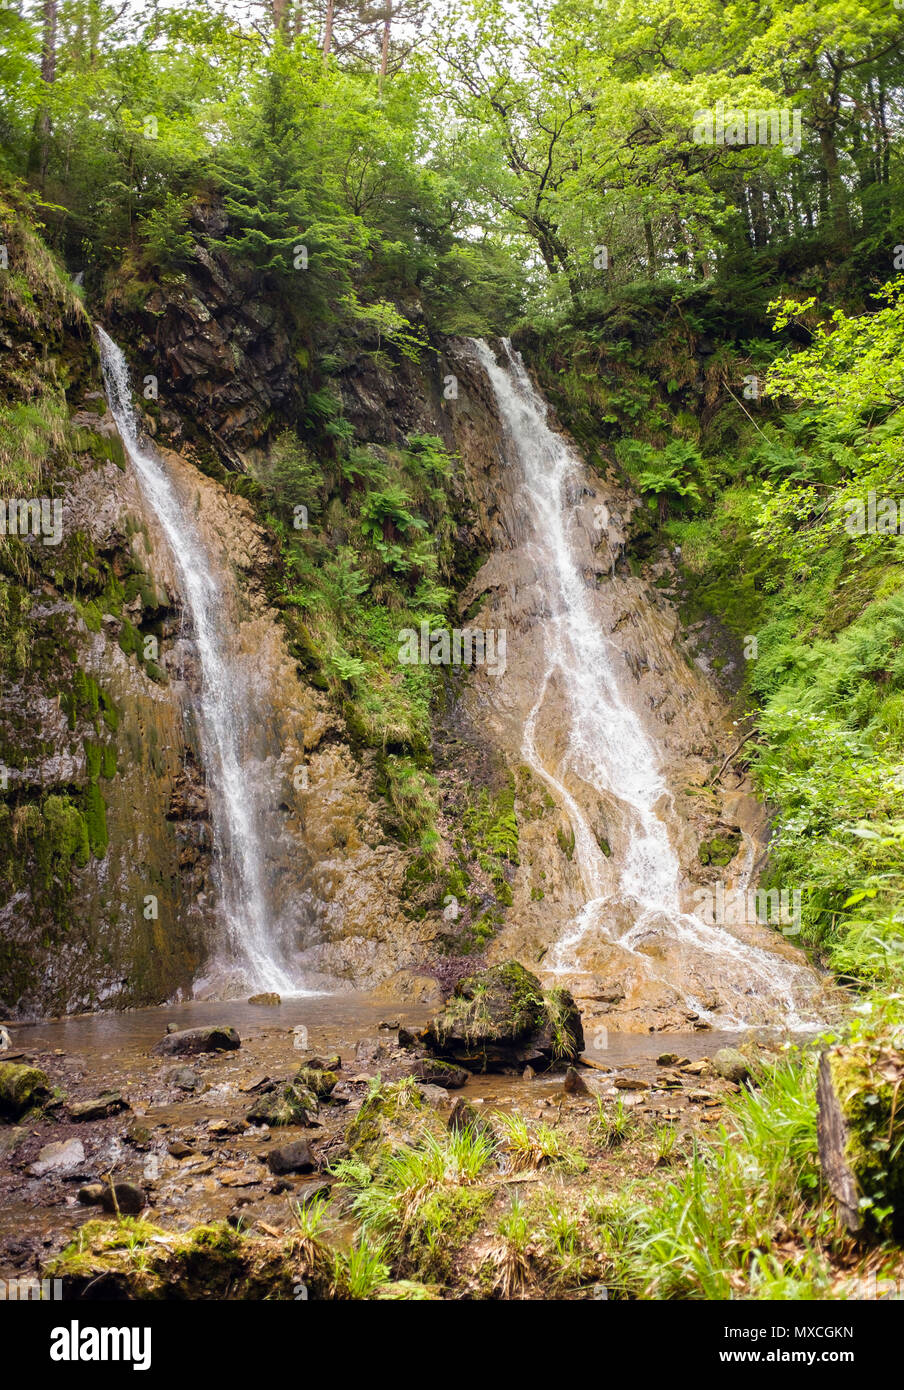 The Grey Mare's Tail waterfall (Rhaeadr y Parc Mawr) twin falls in Gwydyr Forest Park in Snowdonia National Park. Llanrwst, North Wales, UK, Britain Stock Photo